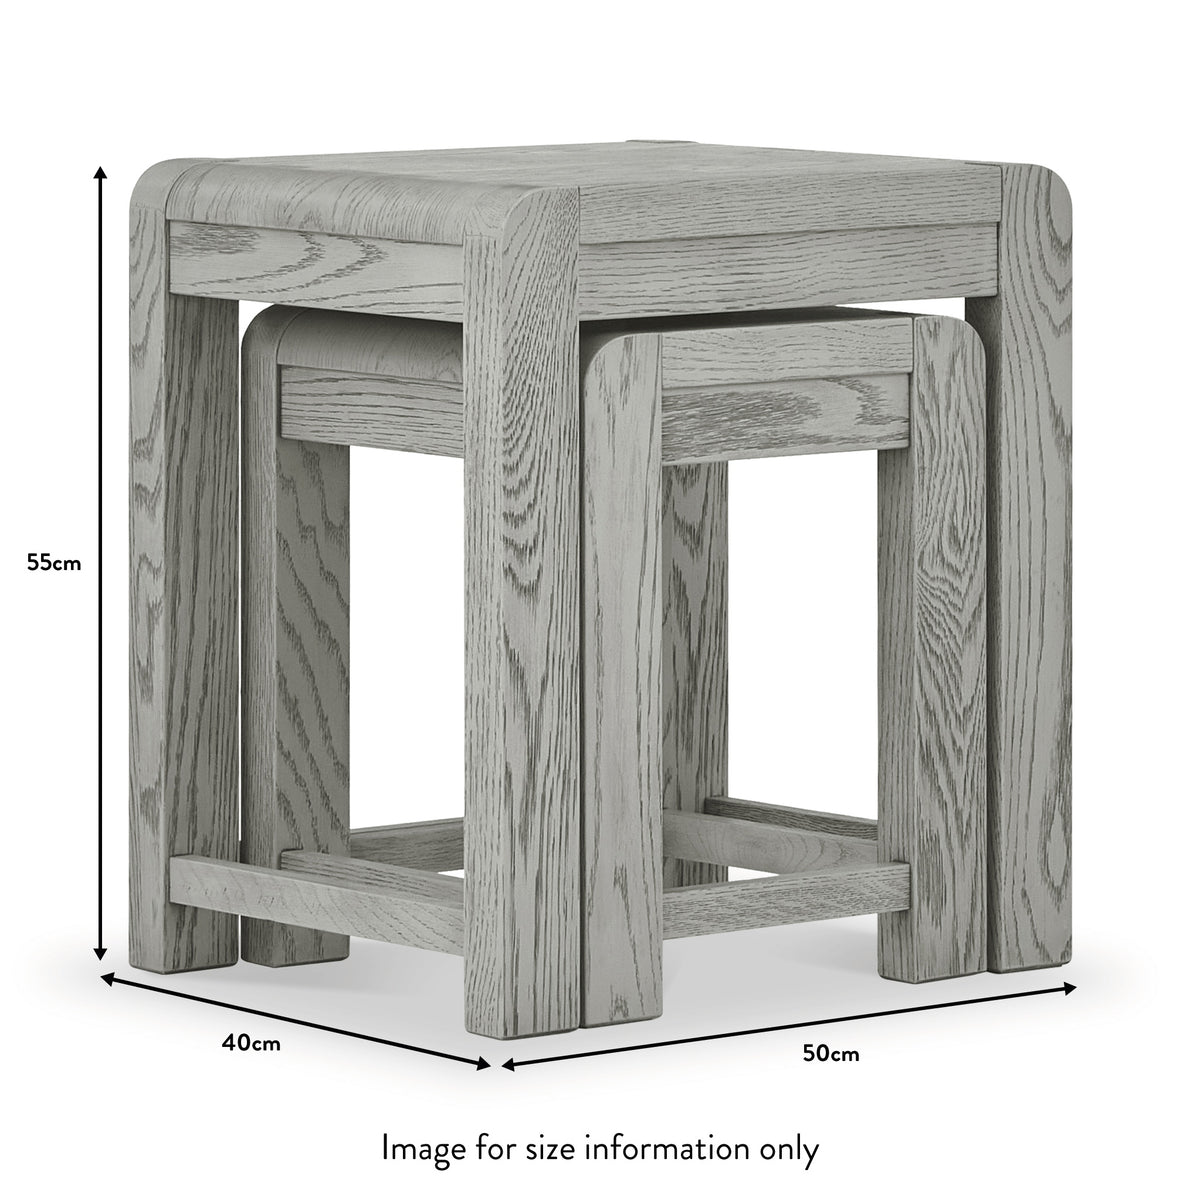 Cardona Nest of 2 Tables dimensions